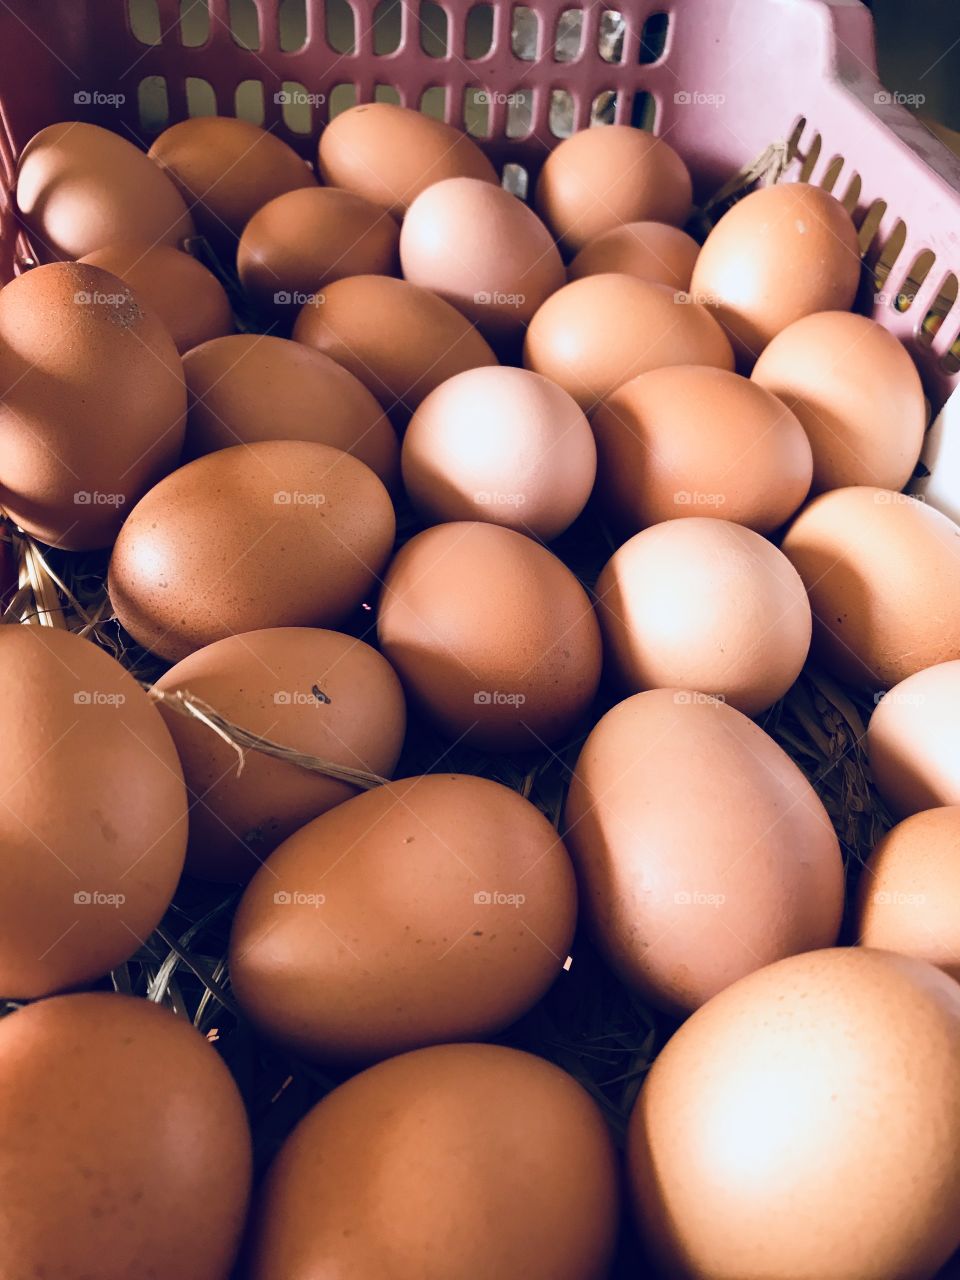 Eggs 🐣